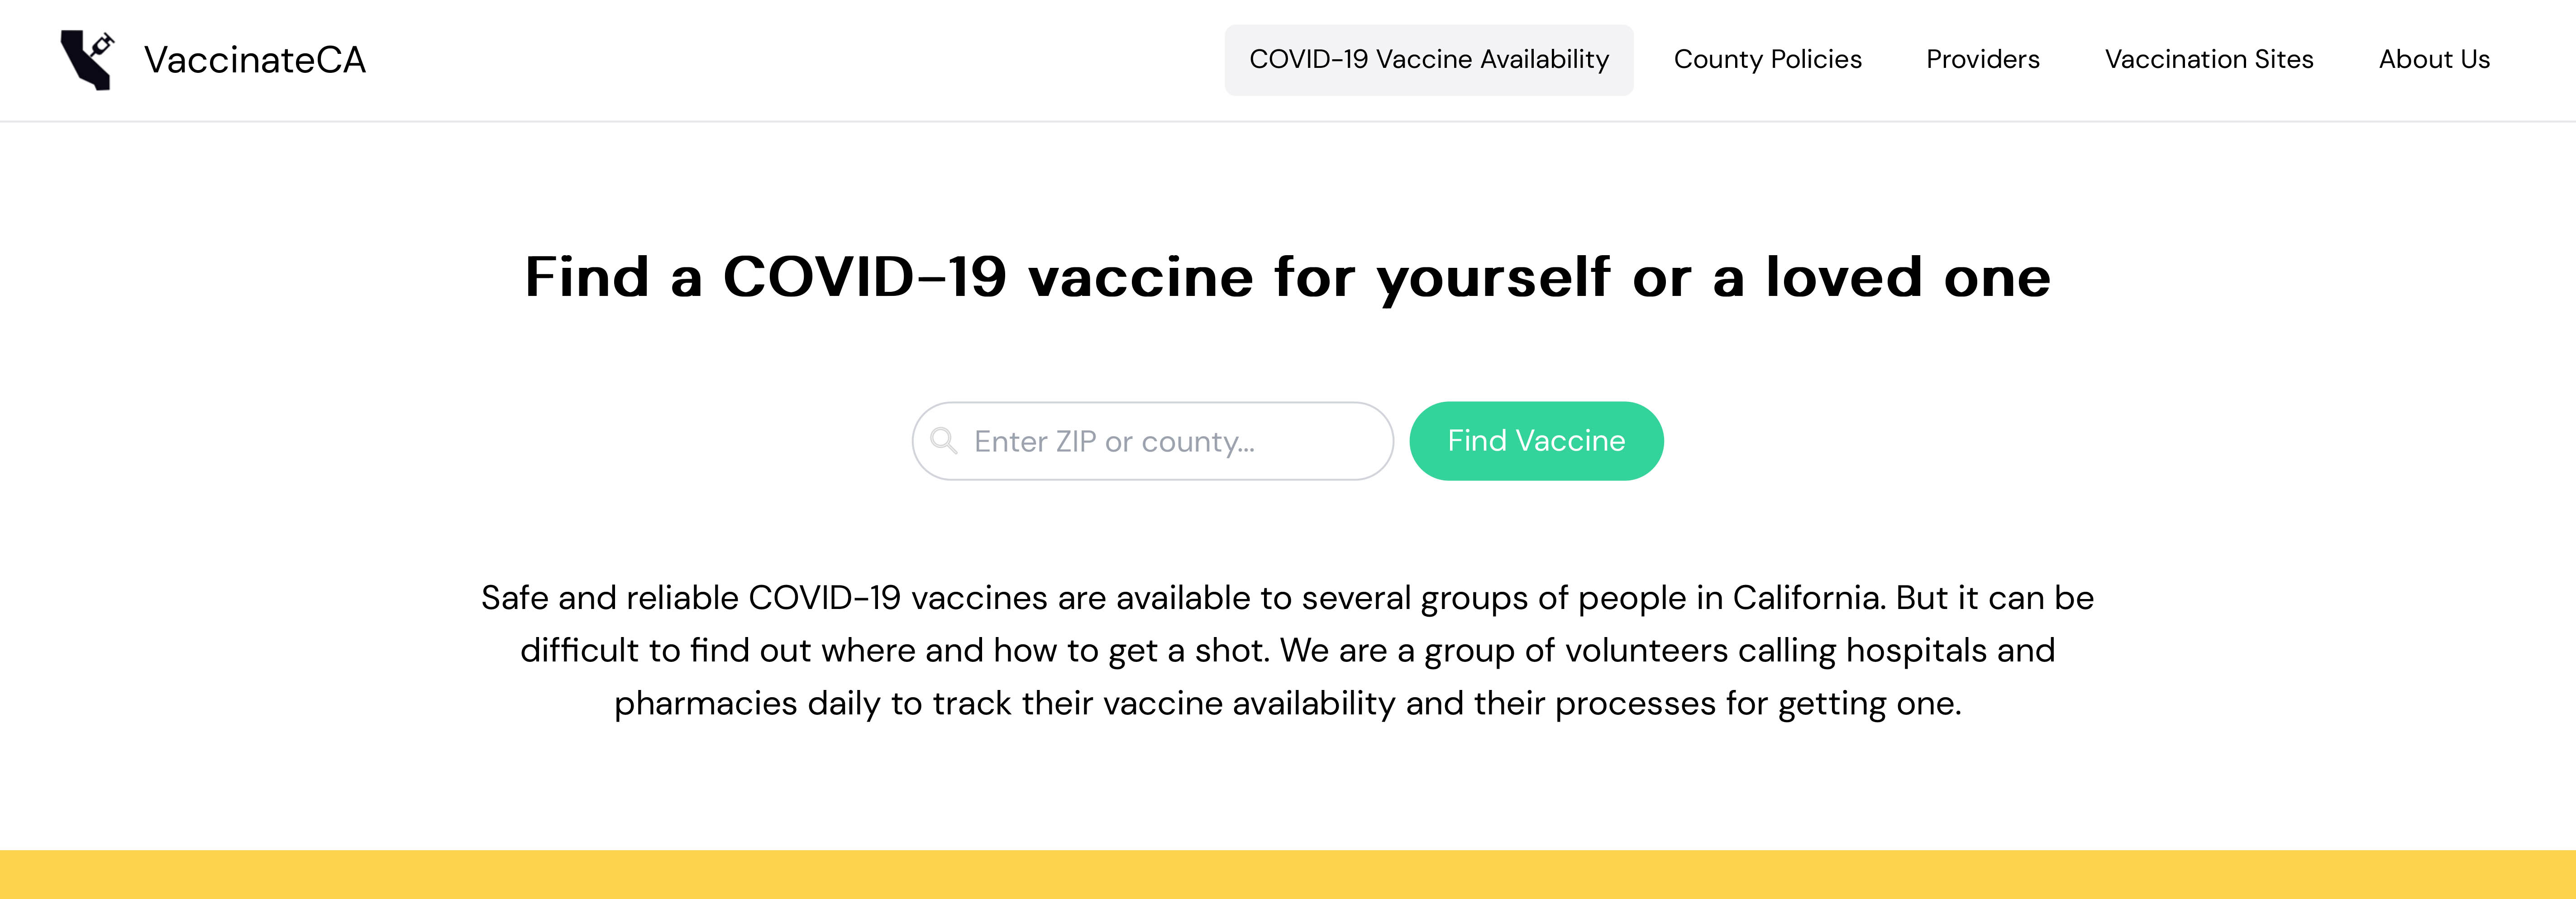 COVID-19 Vaccine Availability  VaccinateCA.jpg